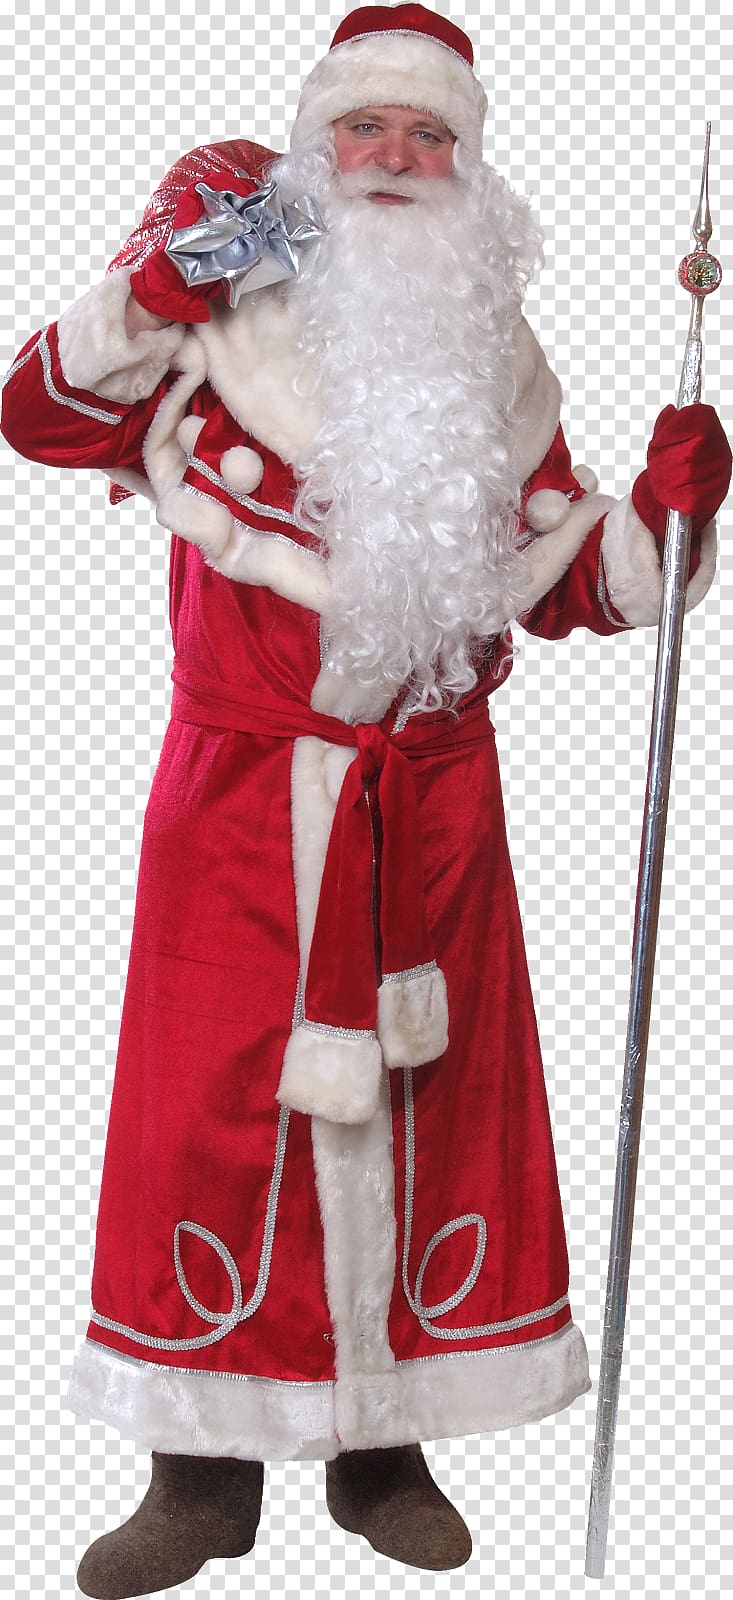 Ded Moroz Santa Claus Snegurochka grandfather Christmas ornament, santa claus transparent background PNG clipart